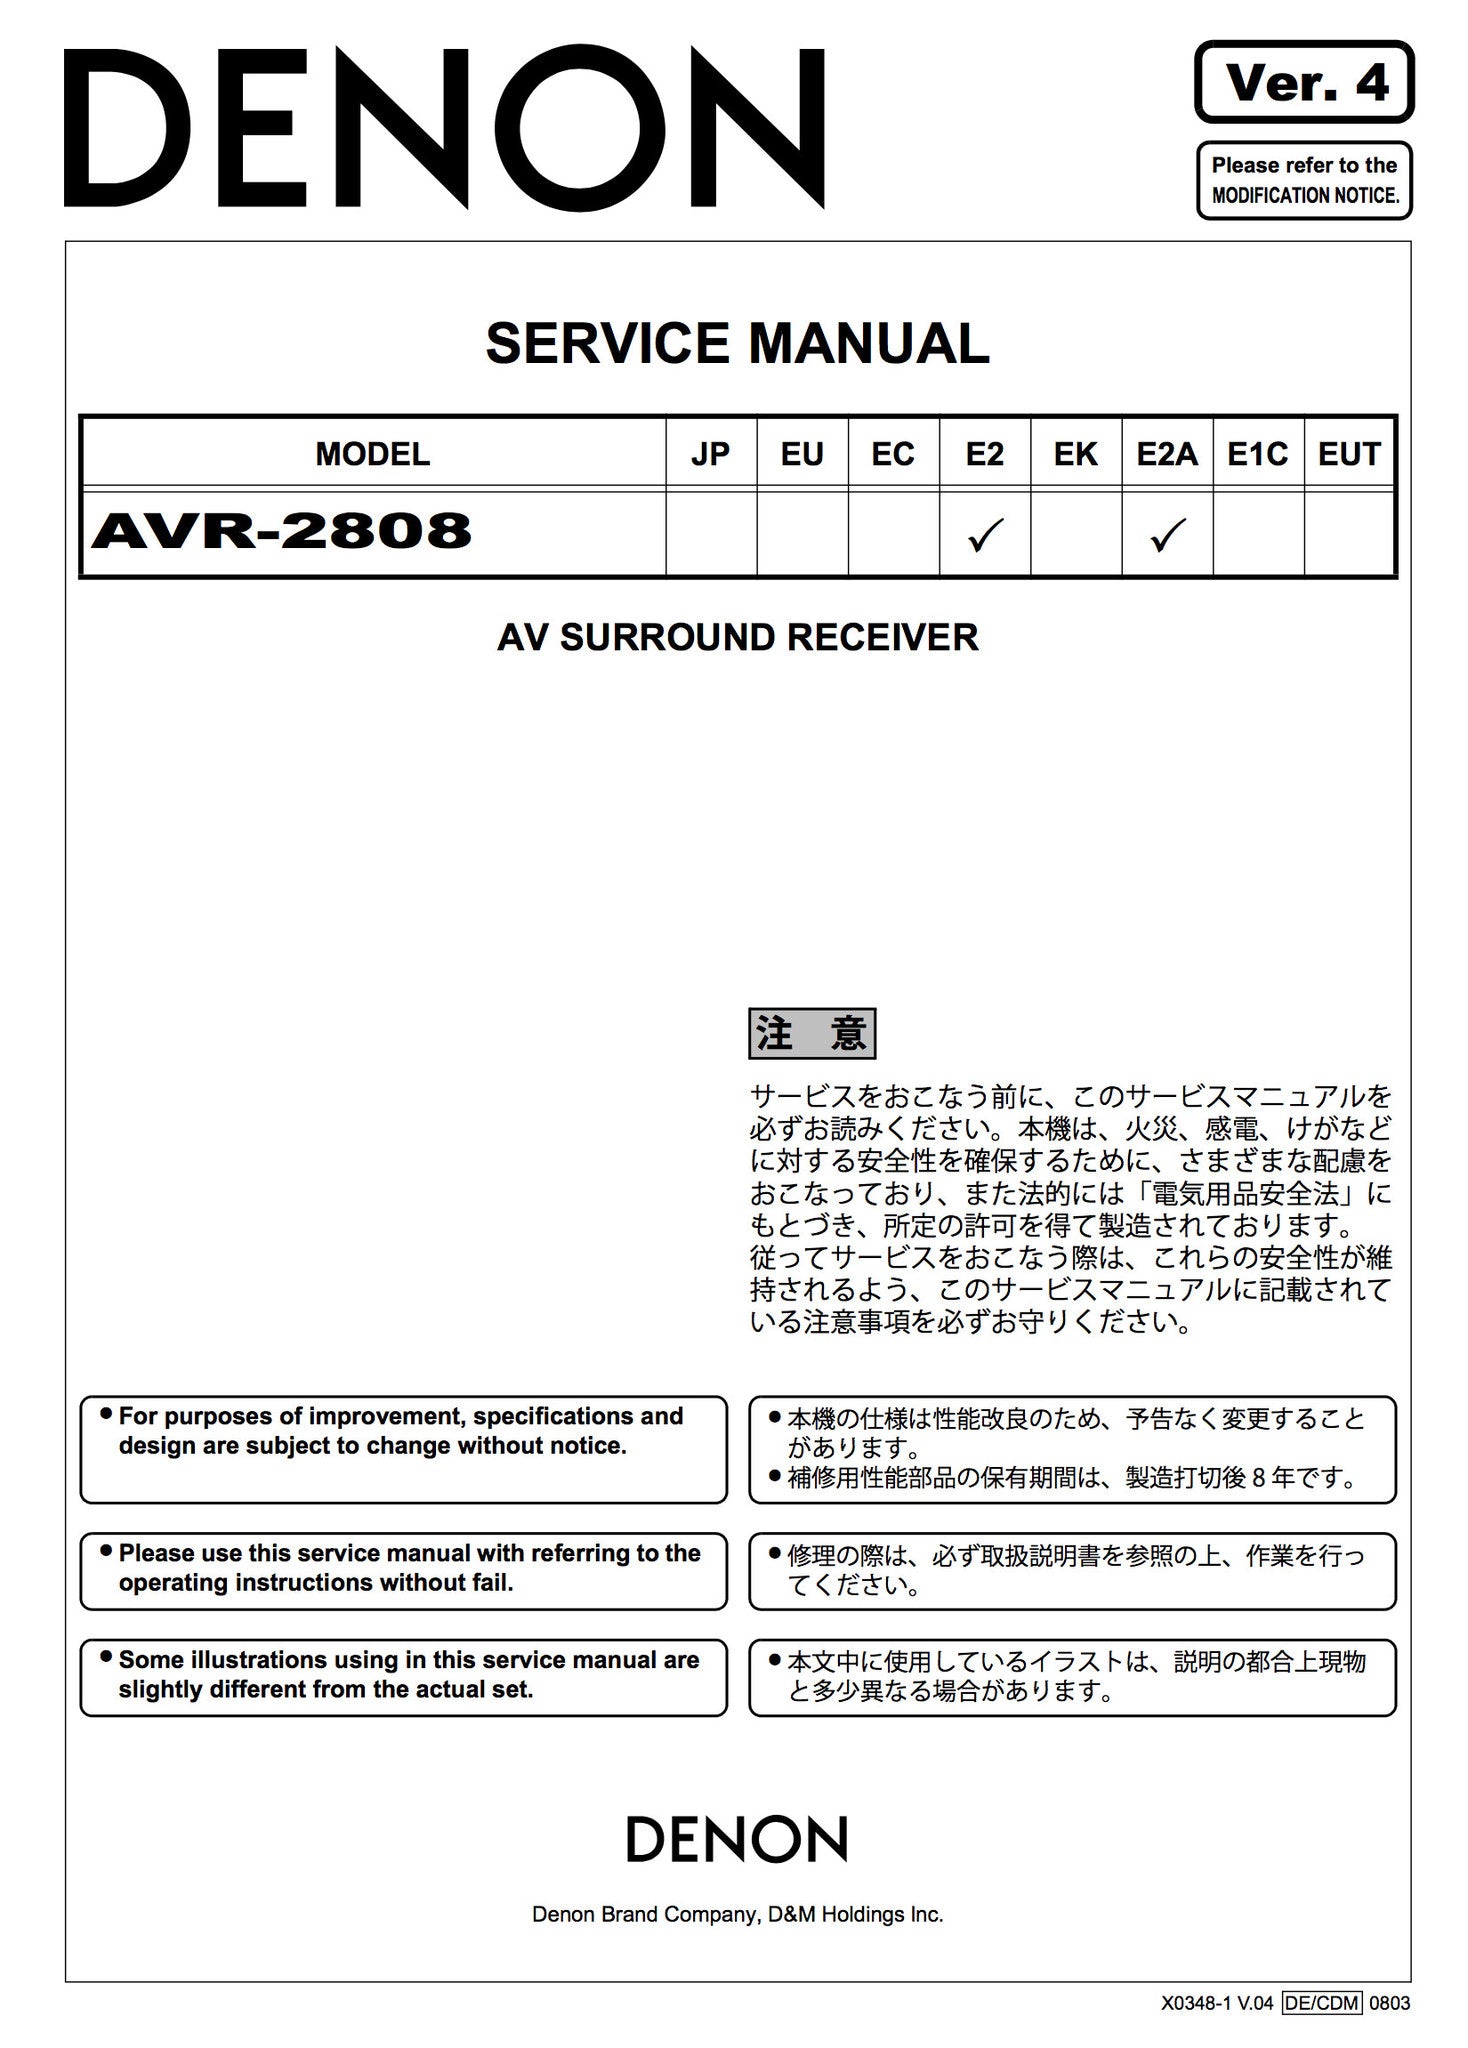 Denon AVR-2808 Service Manual Complete - Spared Parts UK